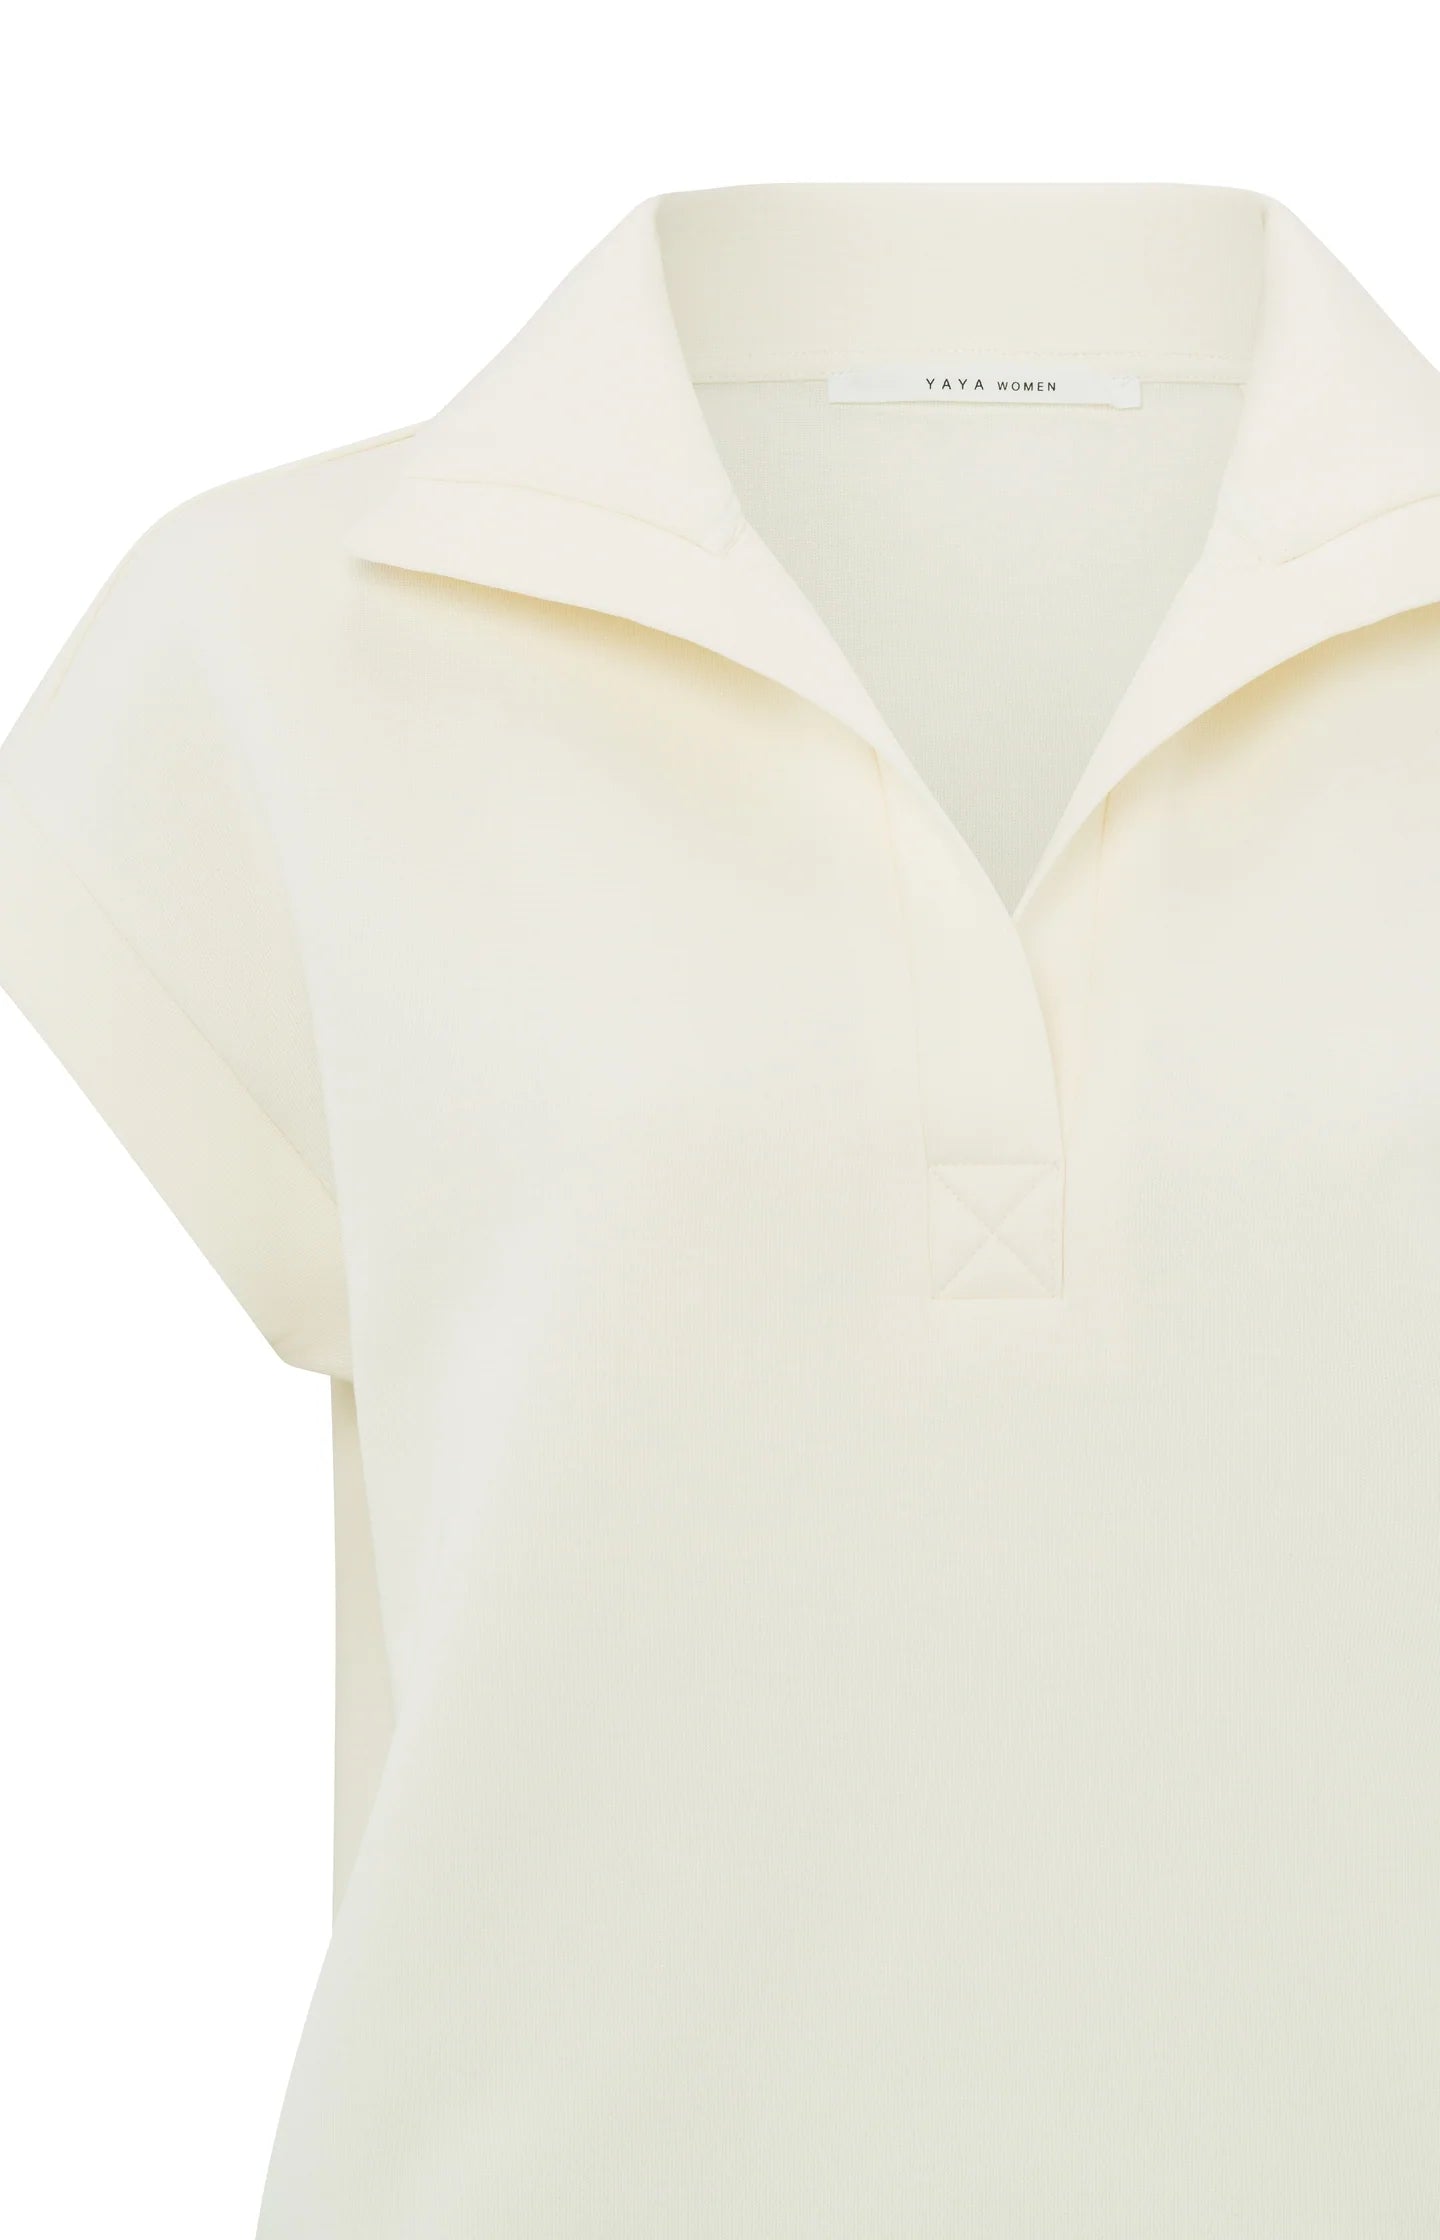 Yaya Sleeveless Polo - Ivory Clothing - Tops - Shirts - SS Knits by Yaya | Grace the Boutique